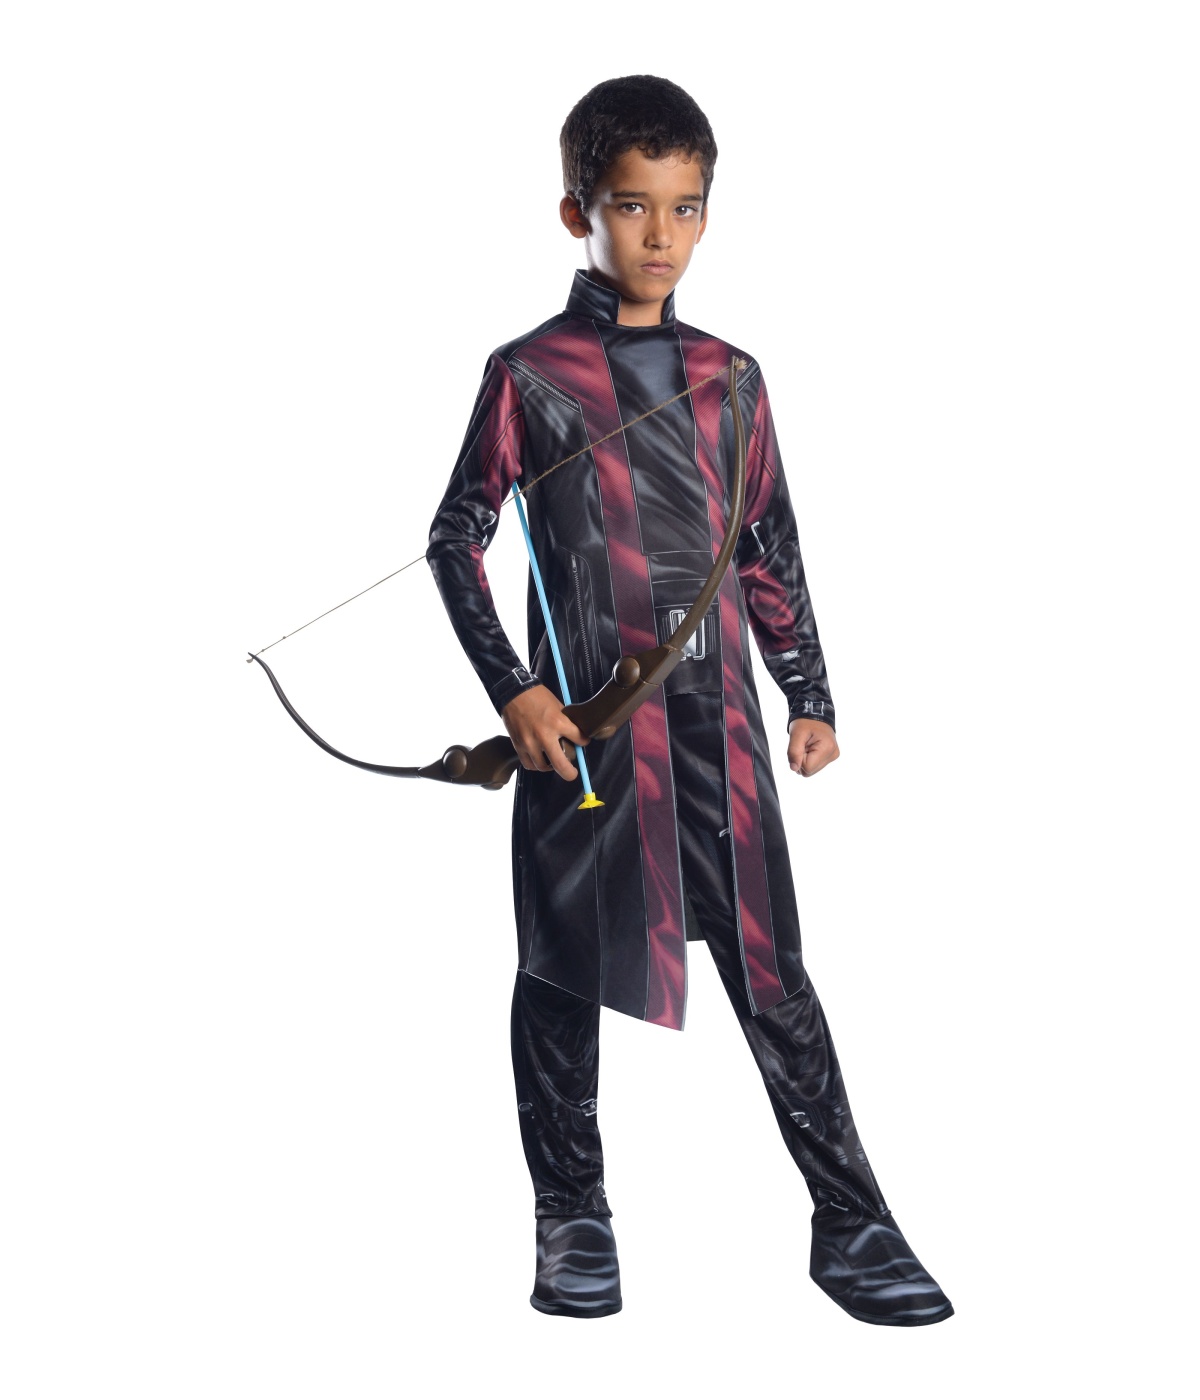  Boys Age Ultron Hawkeye Costume